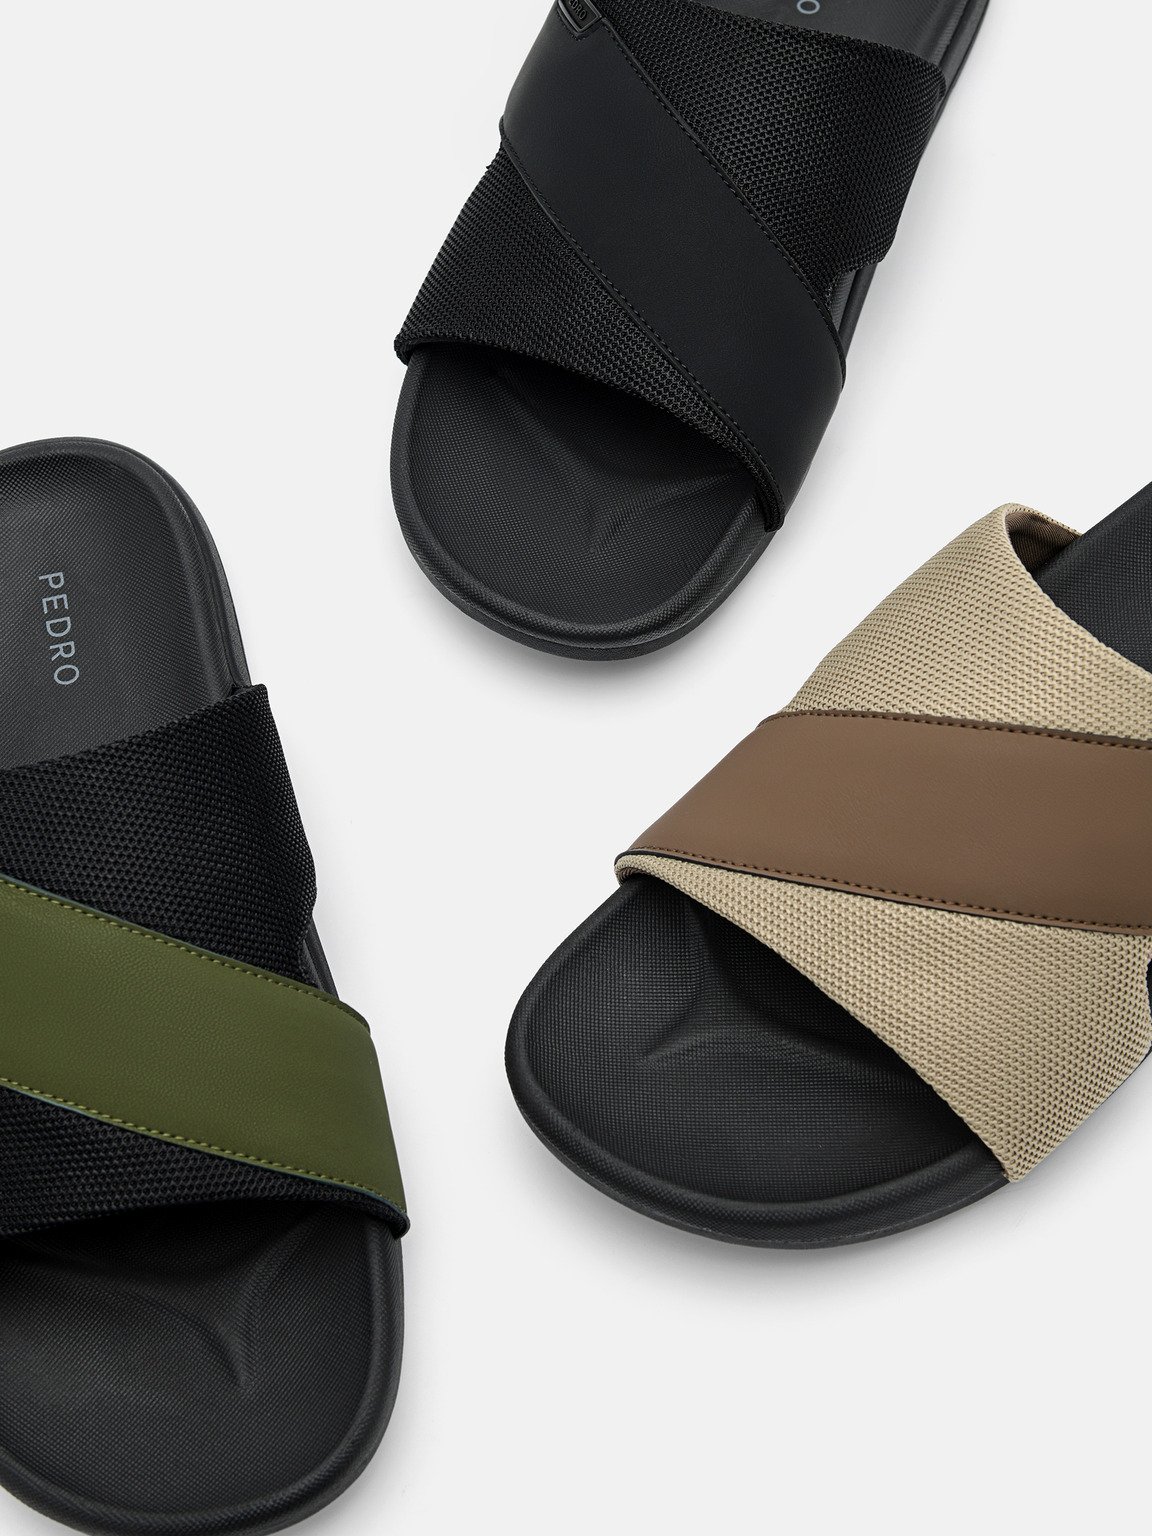 Mesh Slide Sandals, Brown